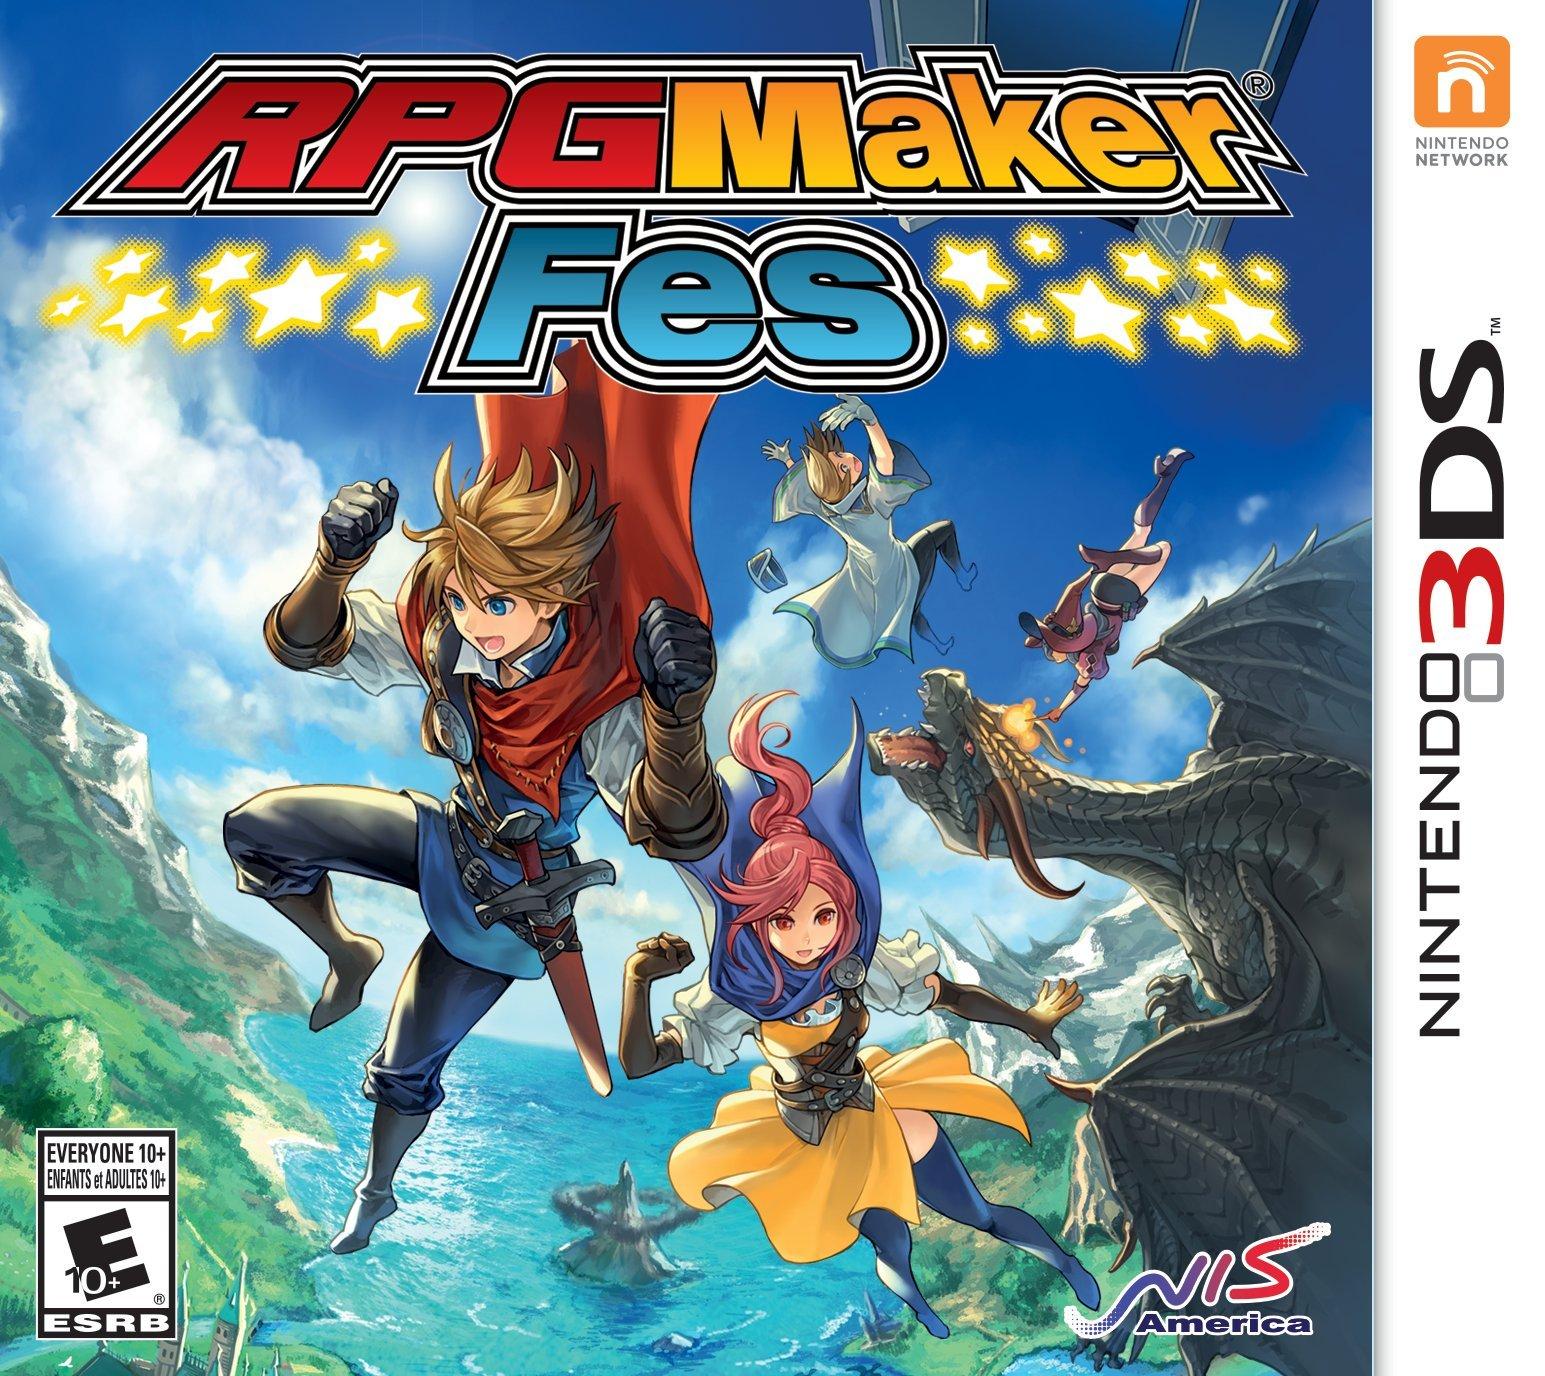 list item 1 of 6 RPG Maker Fes - Nintendo 3DS